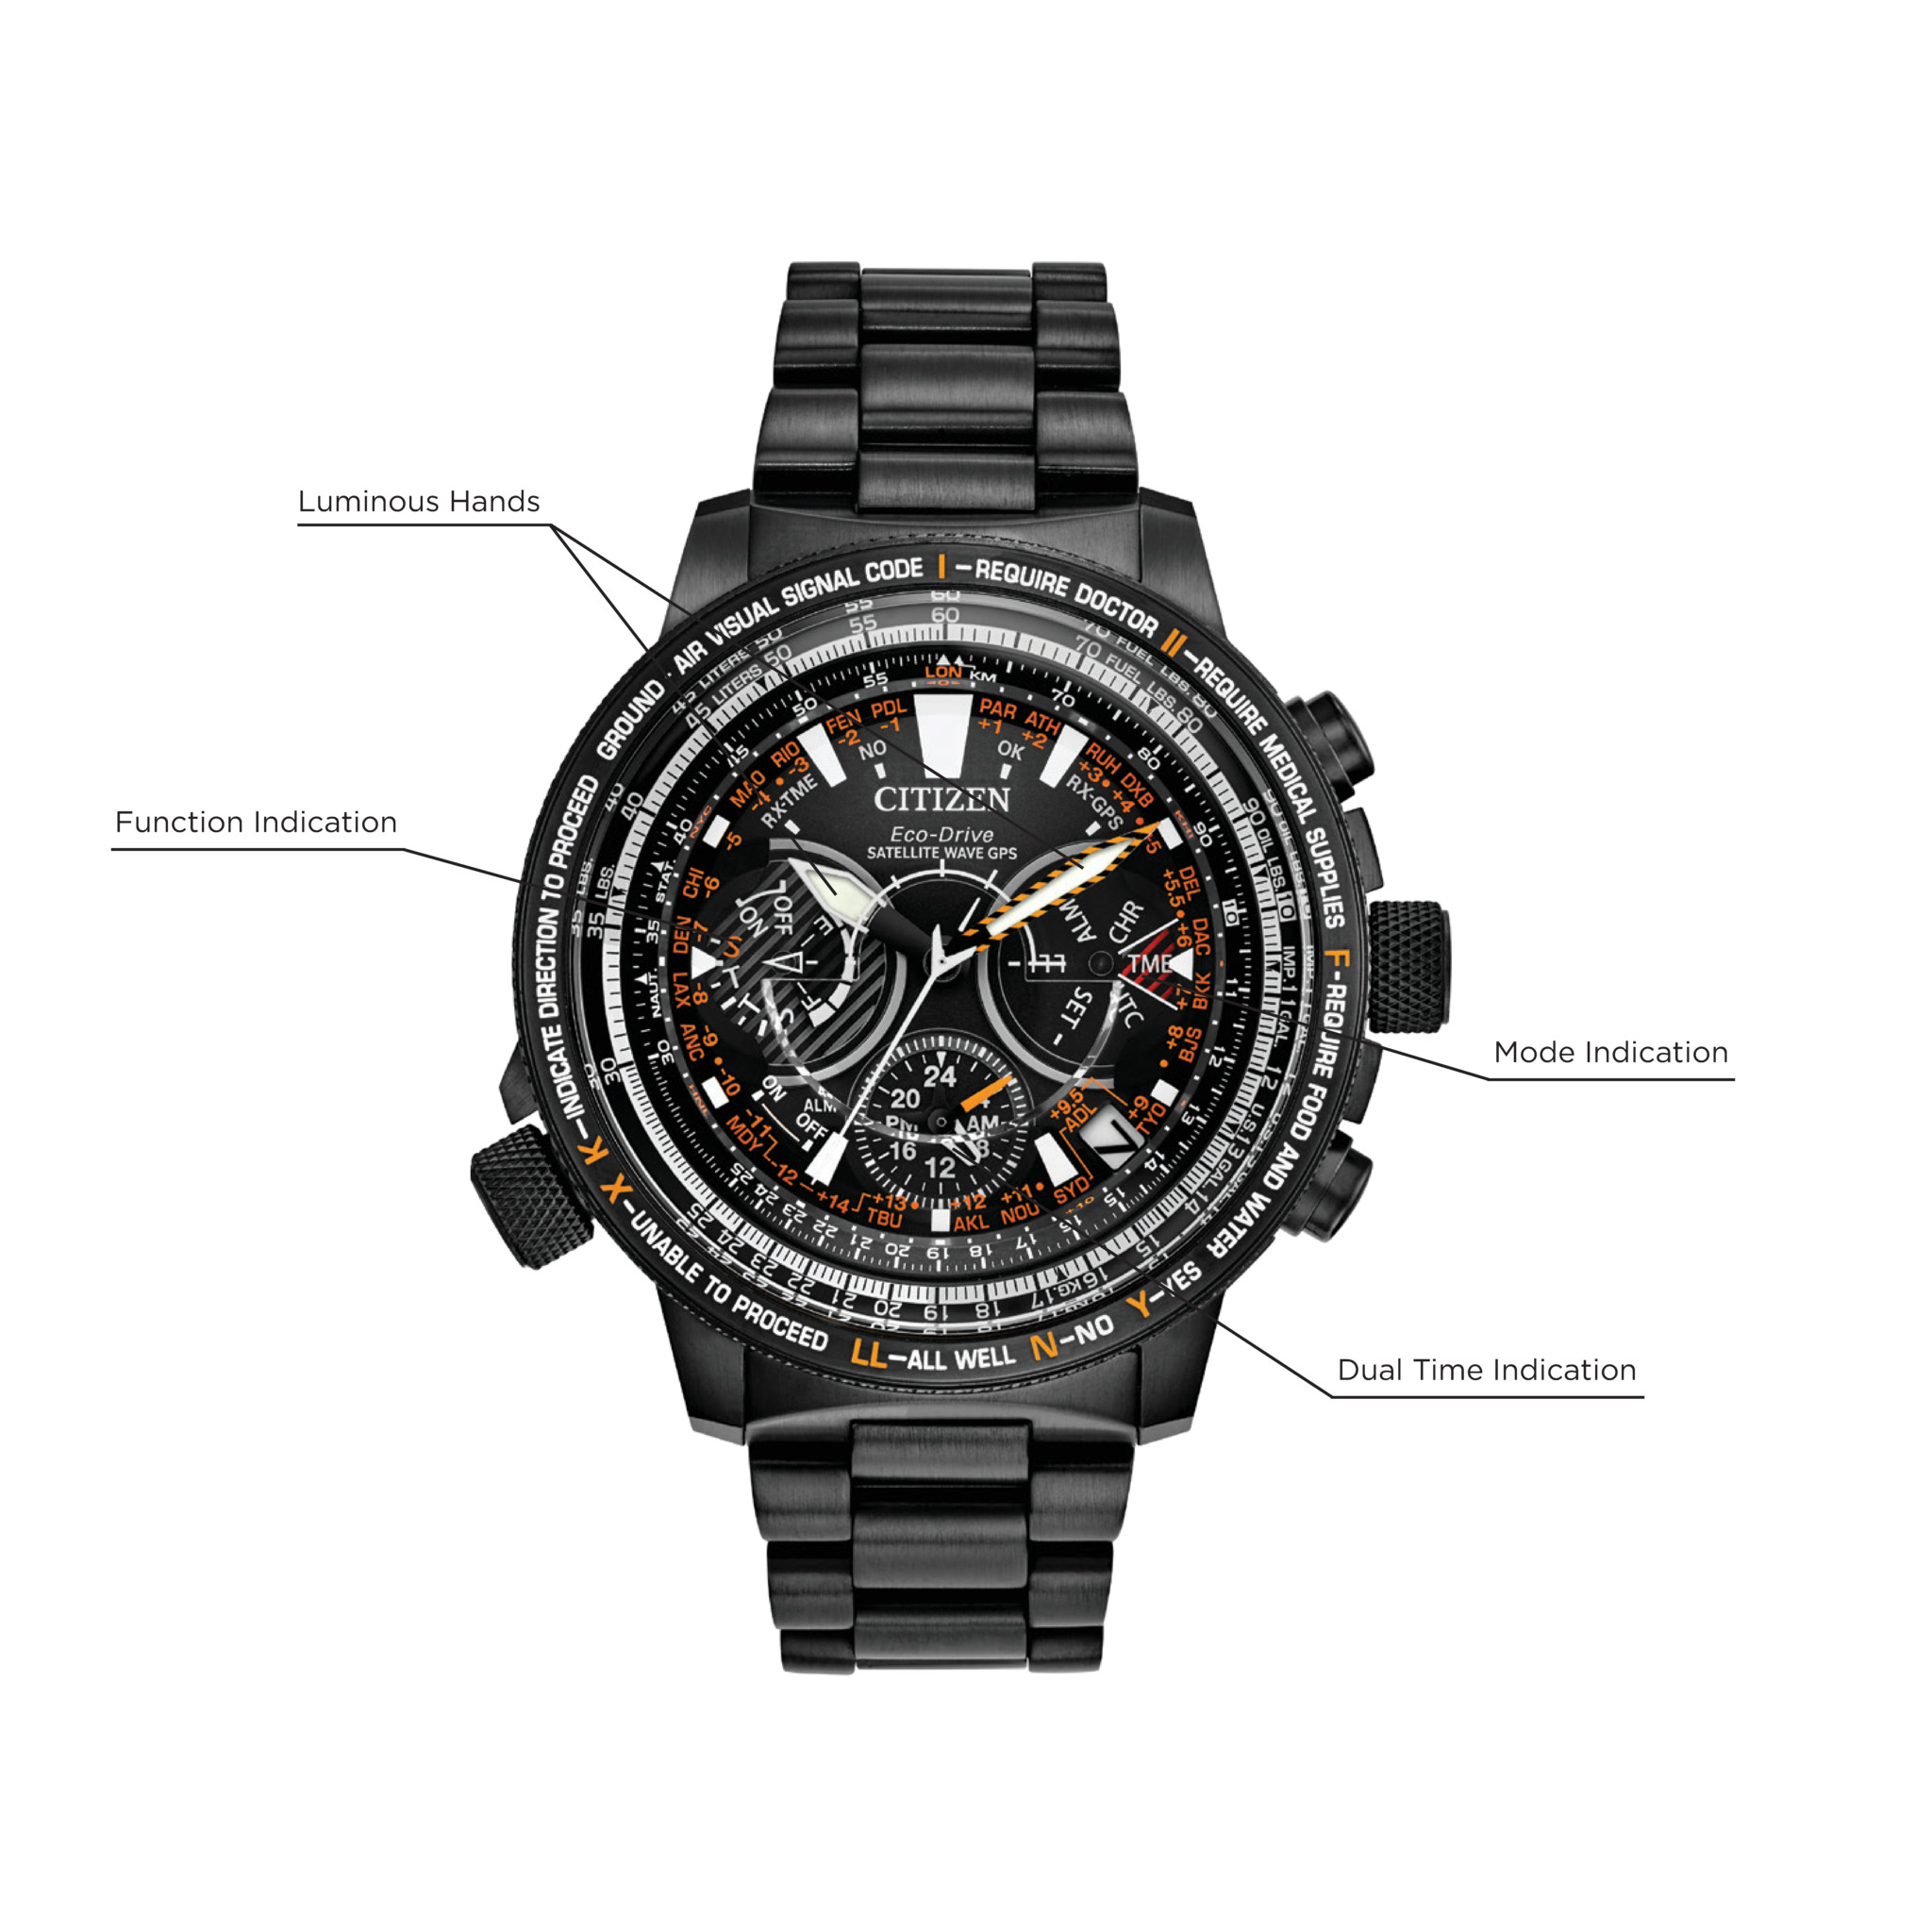 Citizen Satellite Wave GPS Eco-Drive Limited Edition Black Watch | CITIZEN